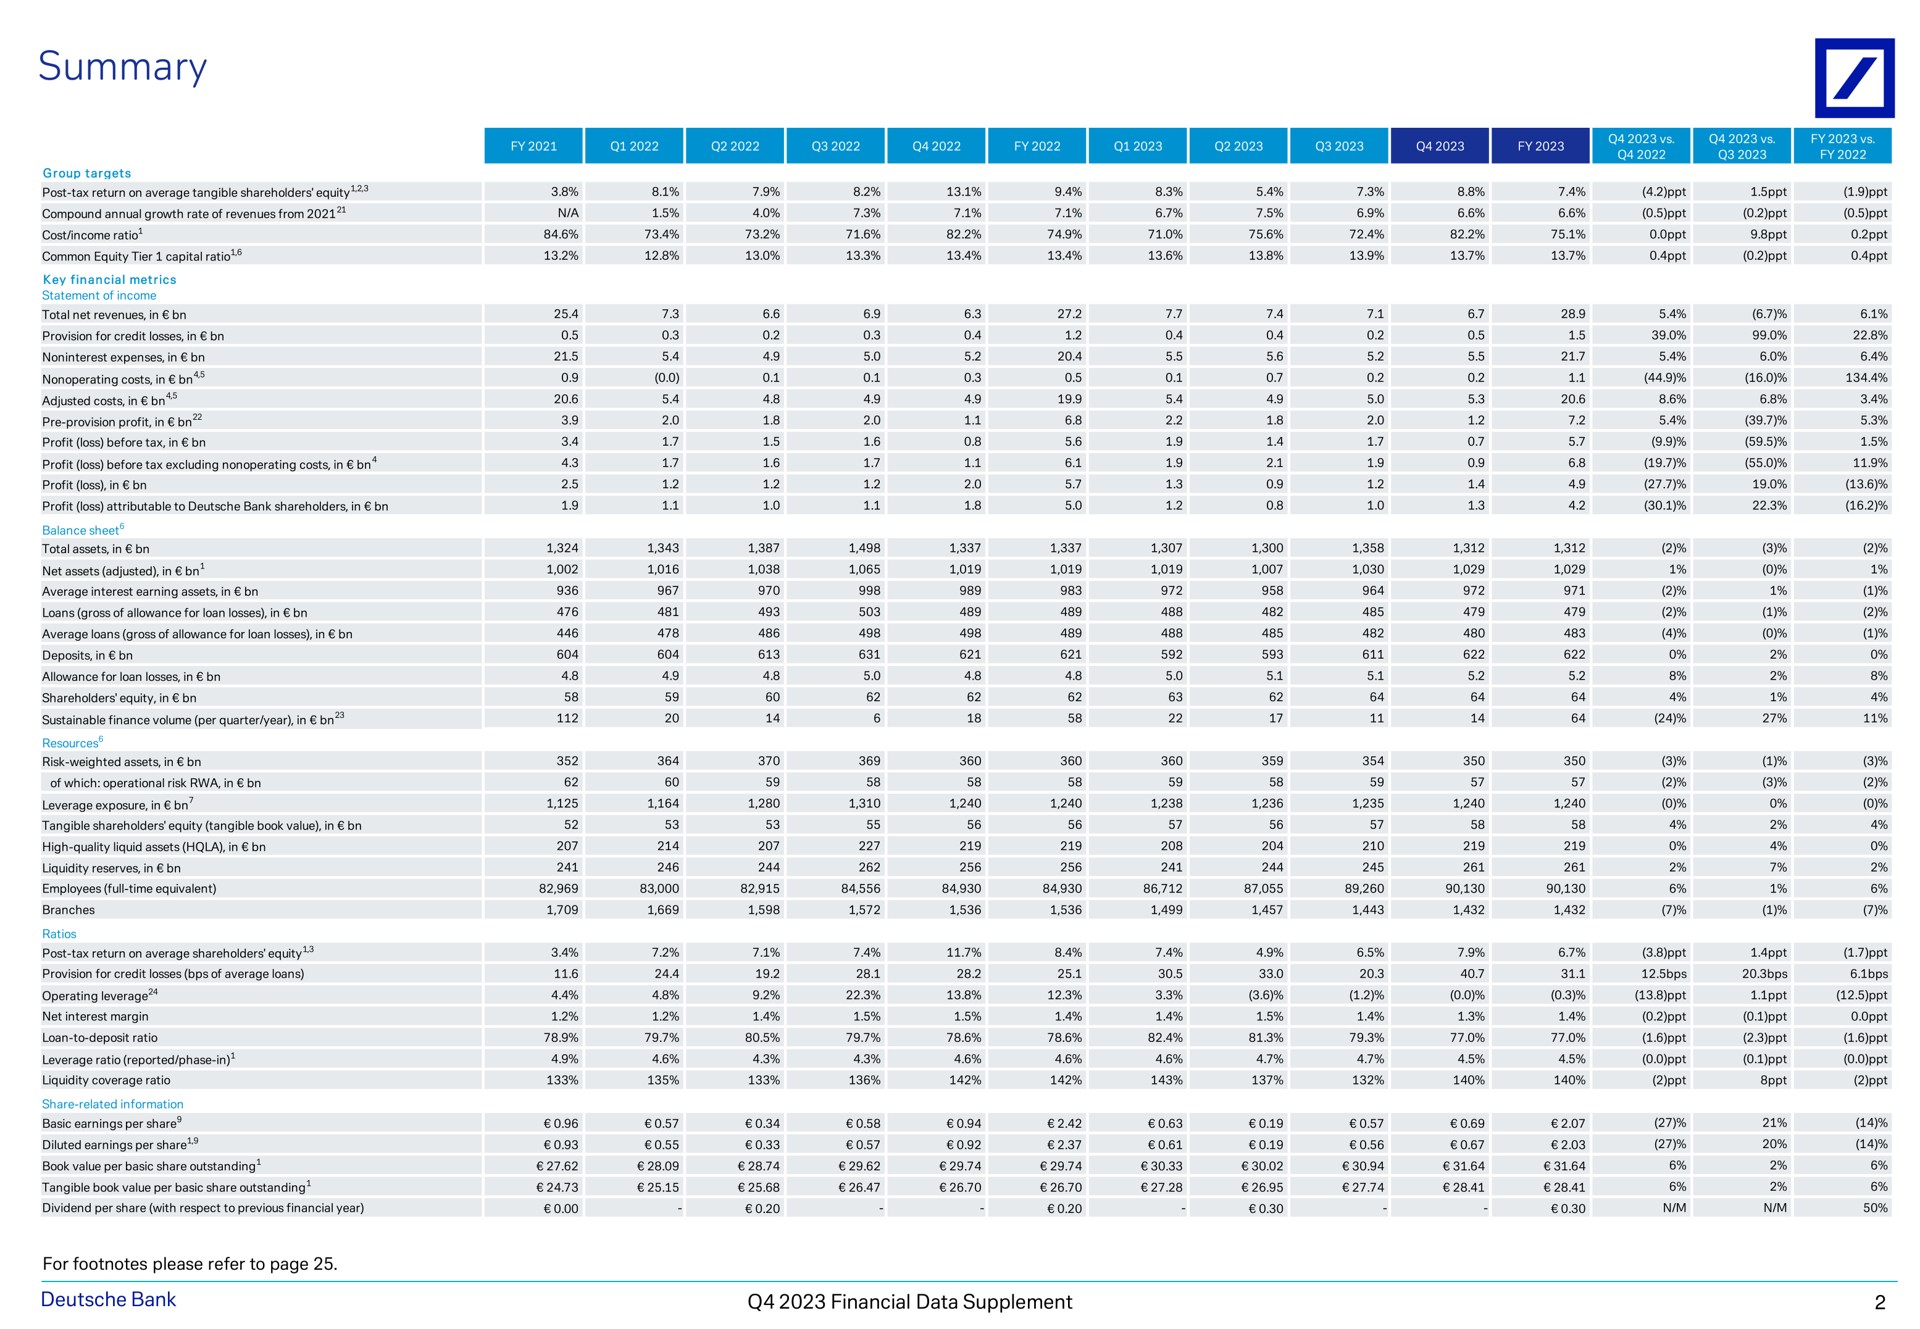 summary bank financial data supplement | Deutsche Bank